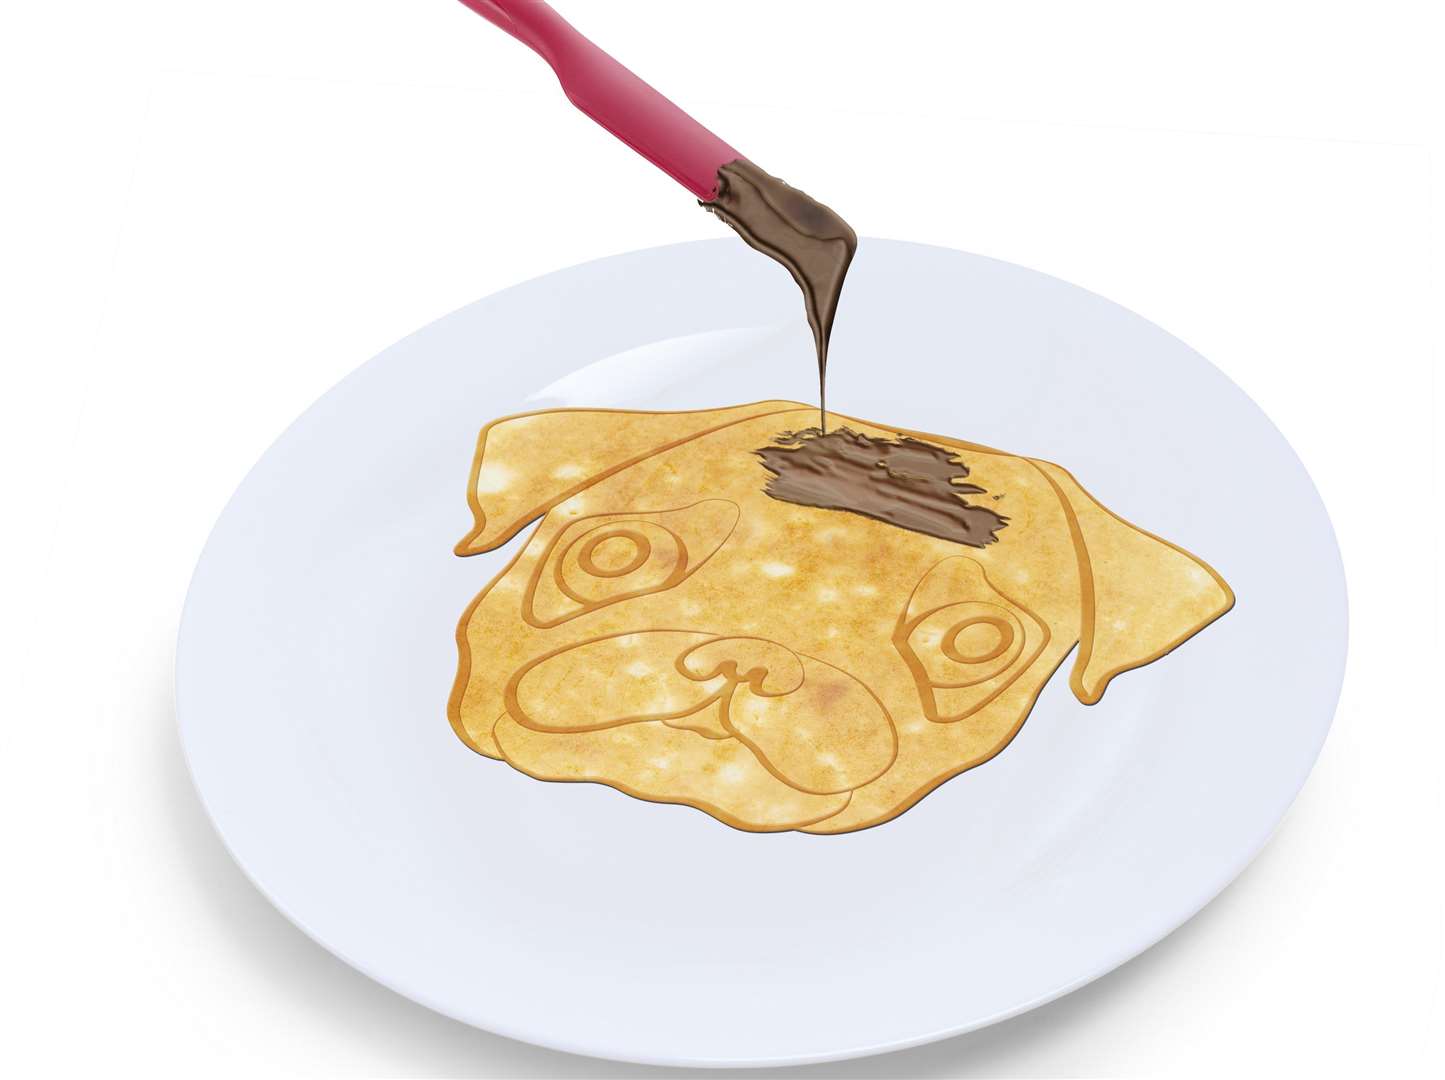 Pug on a pancake!